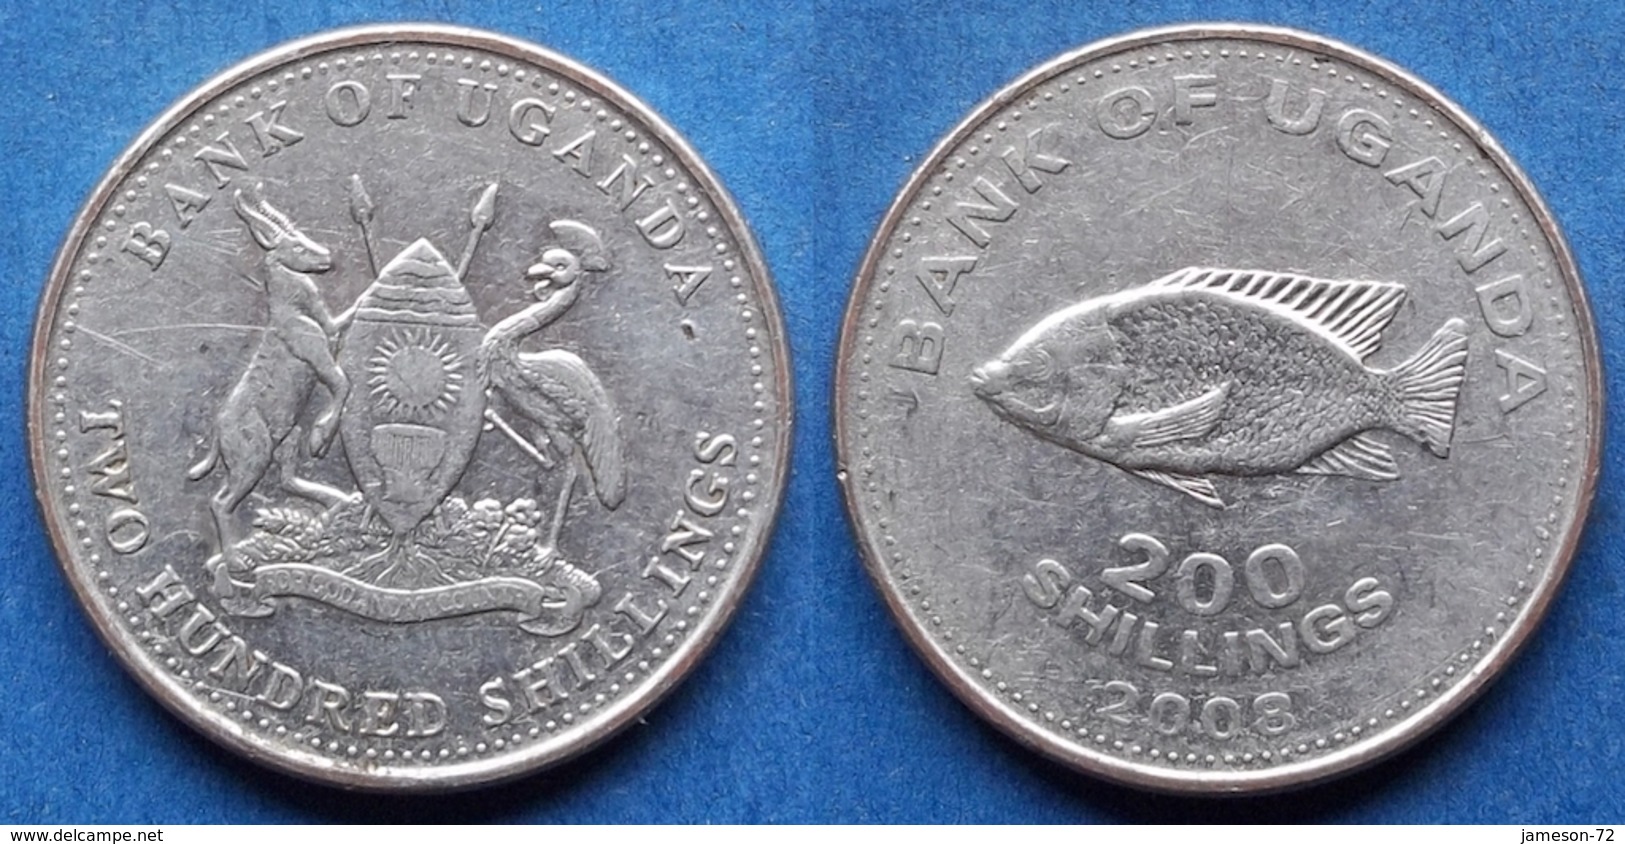 UGANDA - 200 Shillings 2008 "cichlid Fish" KM# 68 Republic - Edelweiss Coins - Uganda